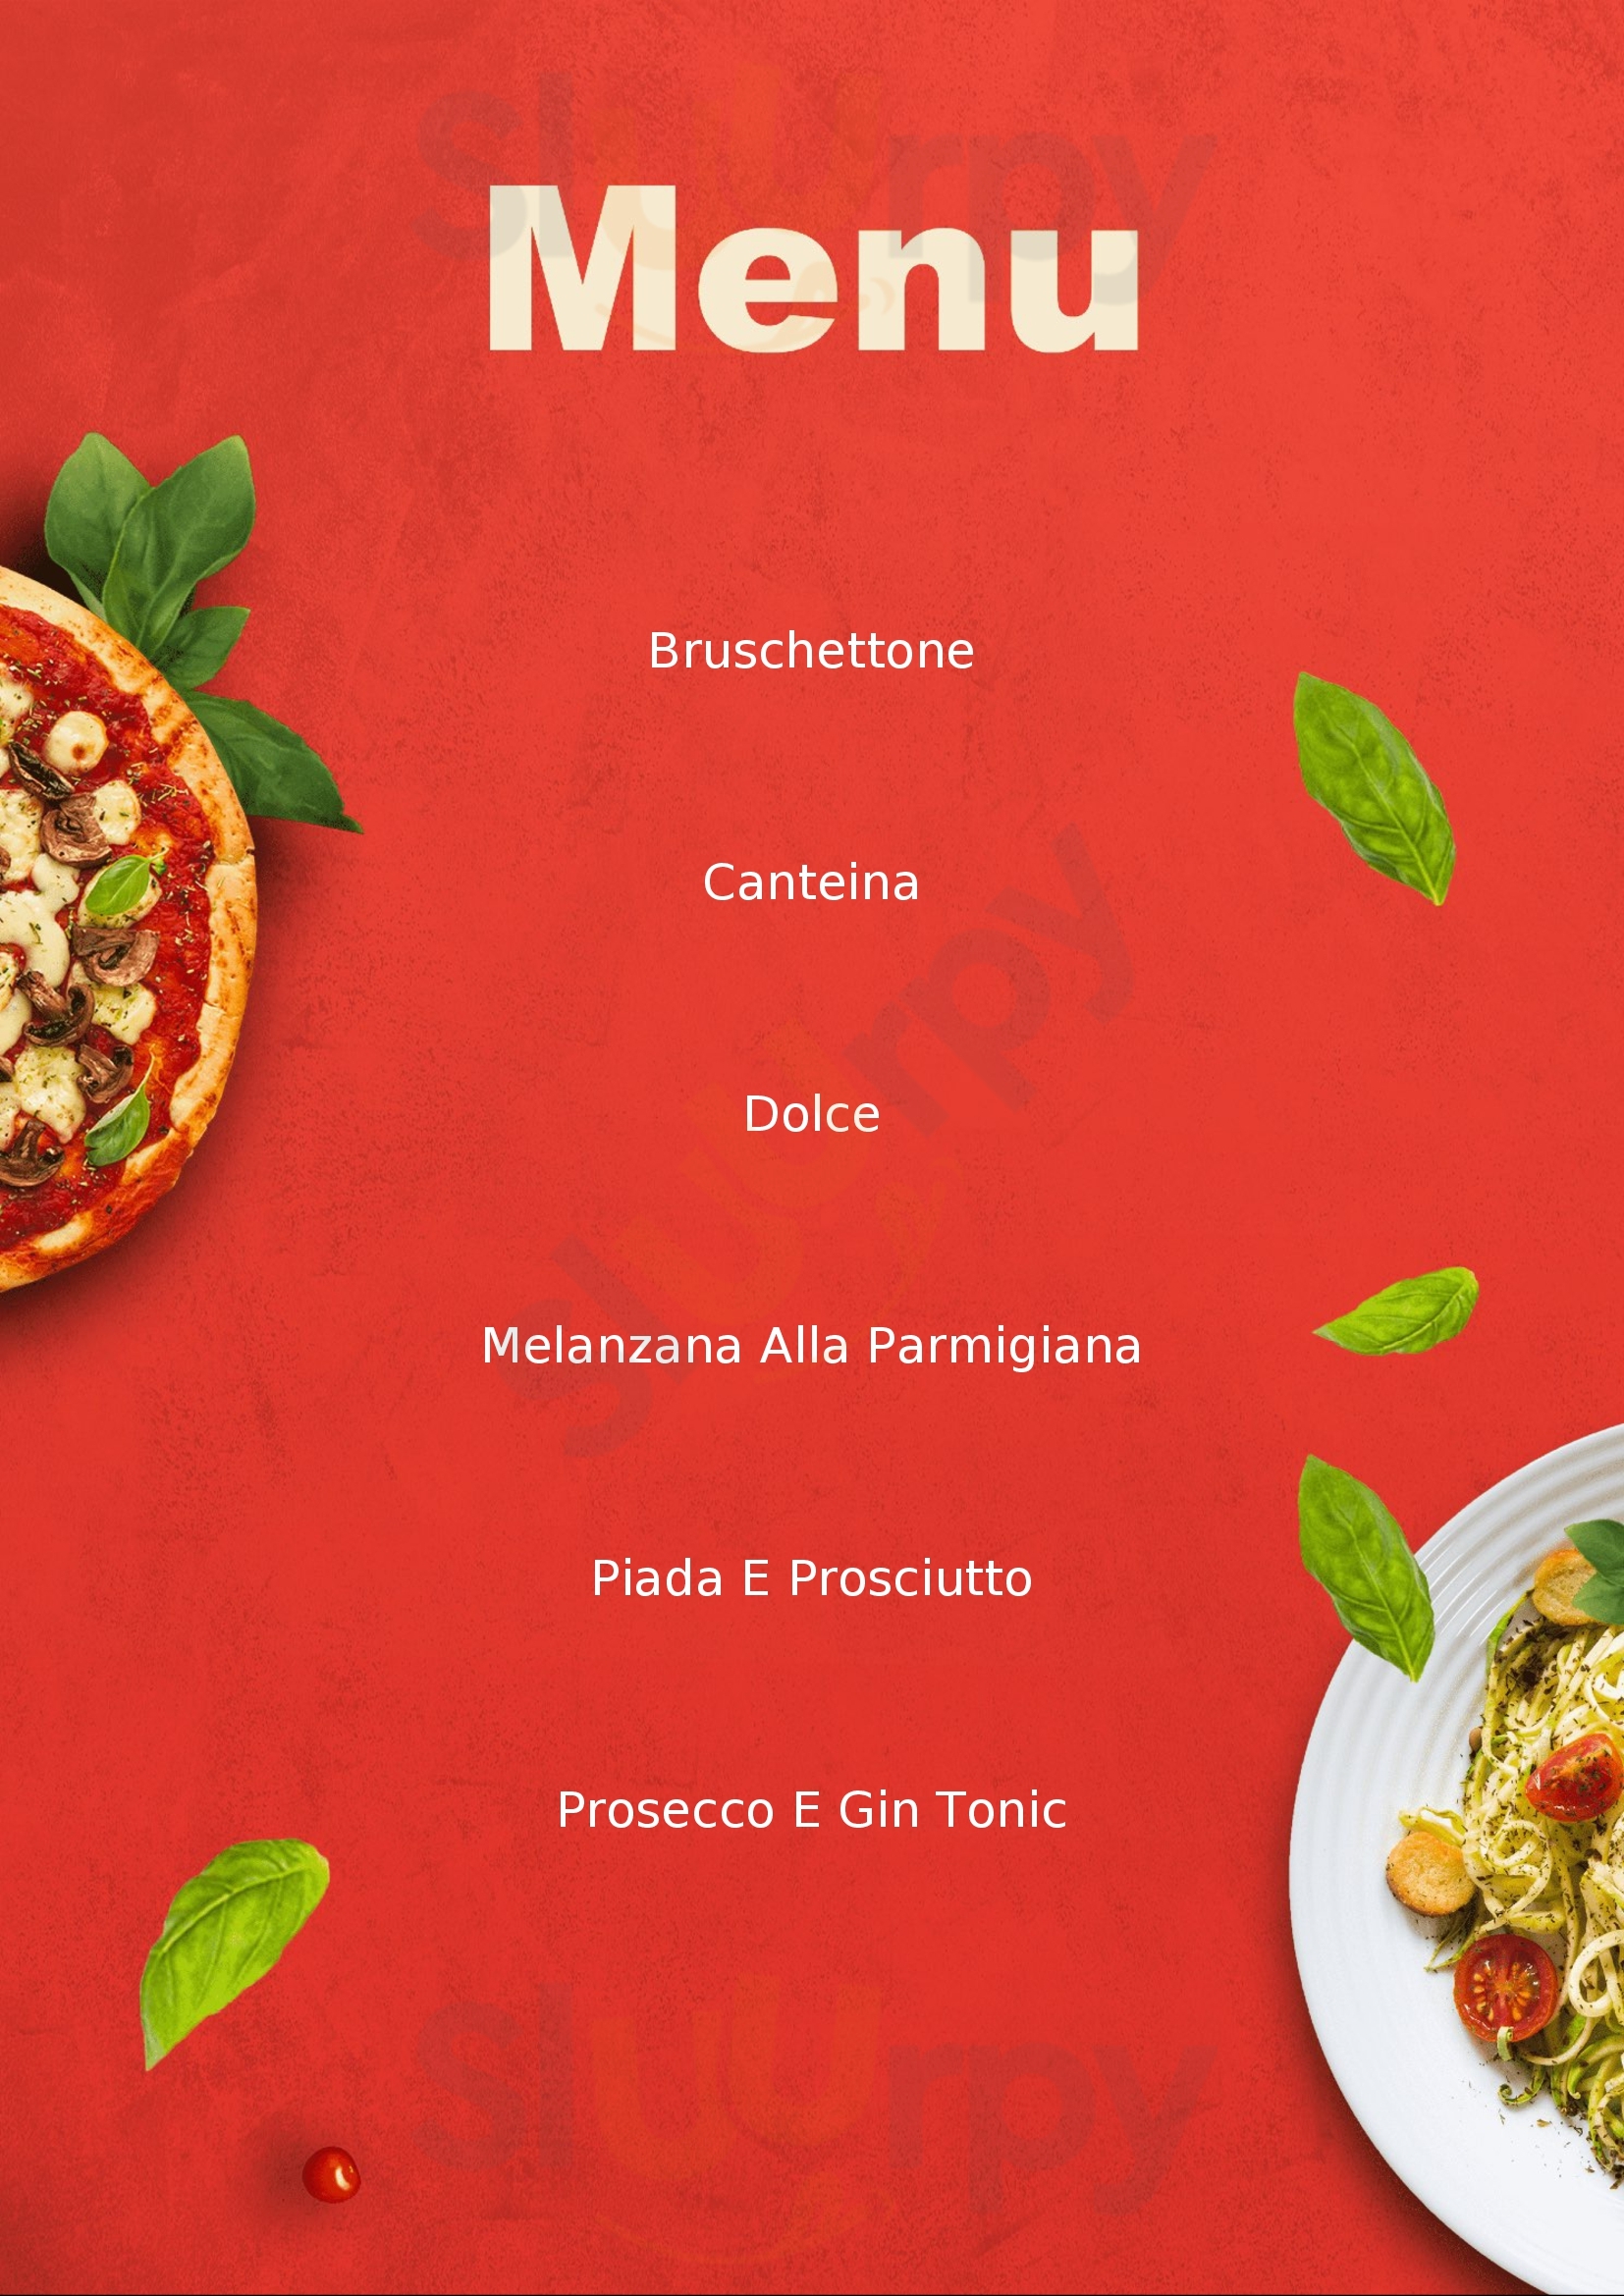 Osteria Enoteca Montegiove Santarcangelo di Romagna menù 1 pagina